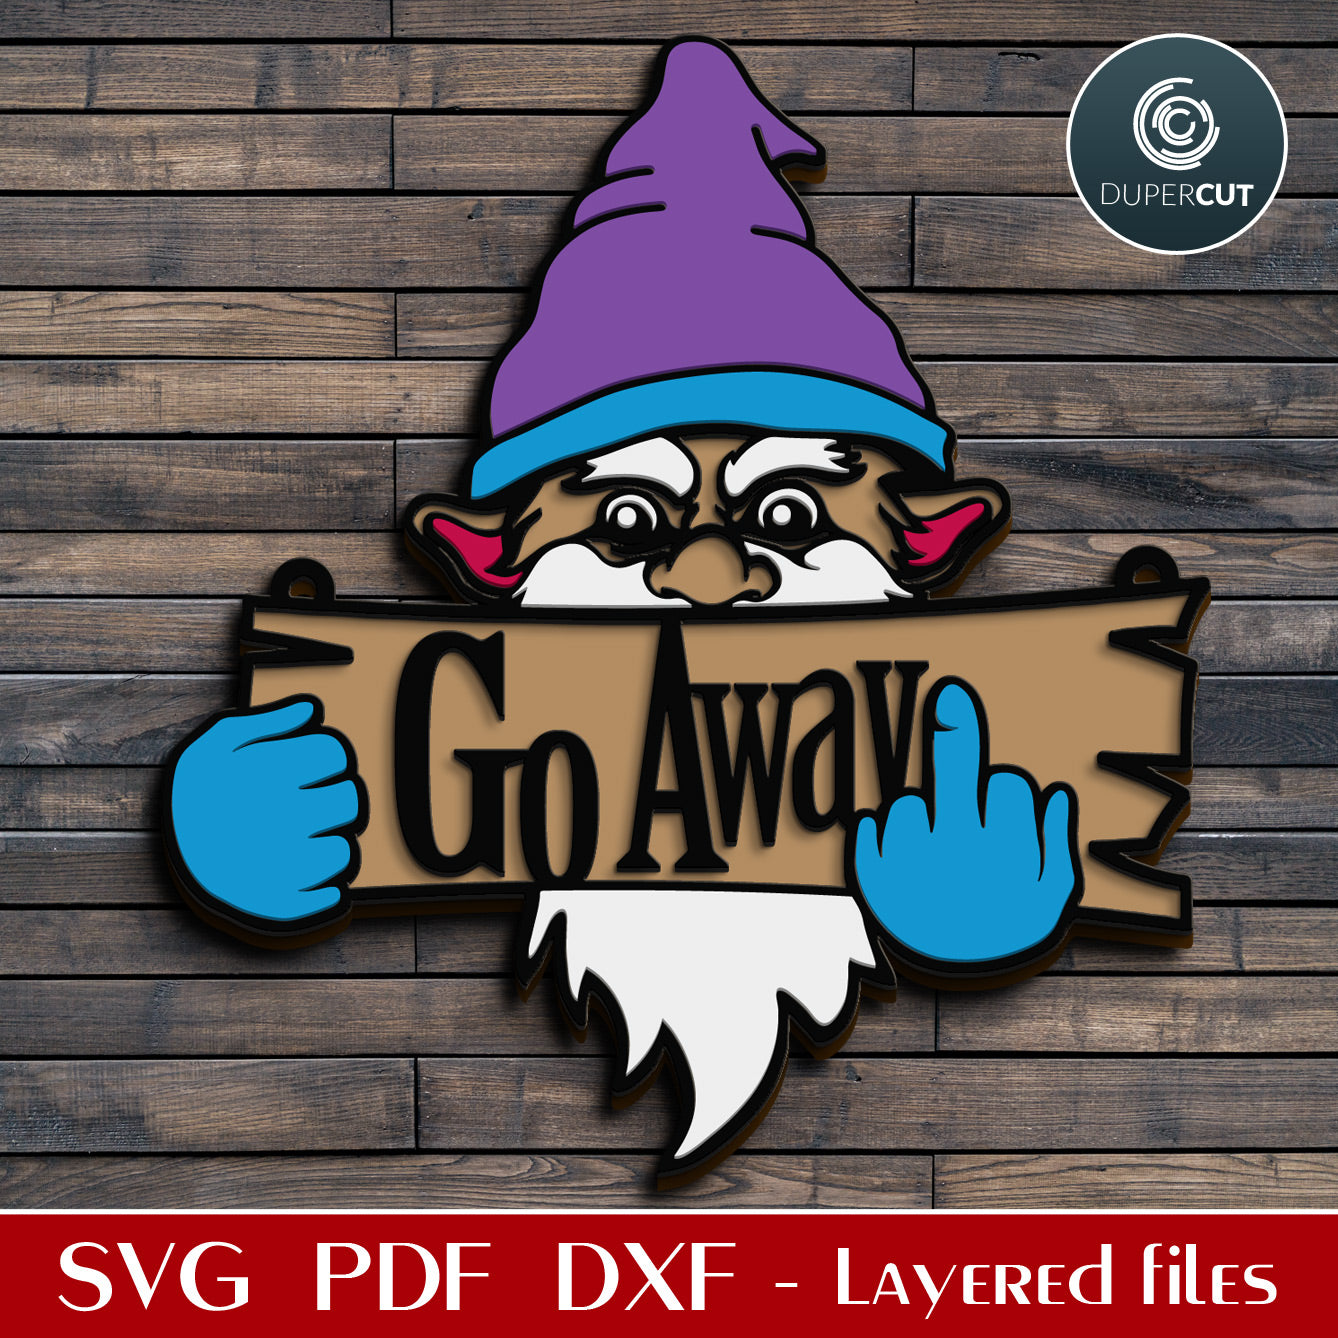 Rude yard gnome Go Away sign - funny DIY door hangers - SVG DXF layered cutting files for laser Glowforge, Xtool, Cricut, CNC plasma machines, scroll saw pattern by www.DuperCut.com